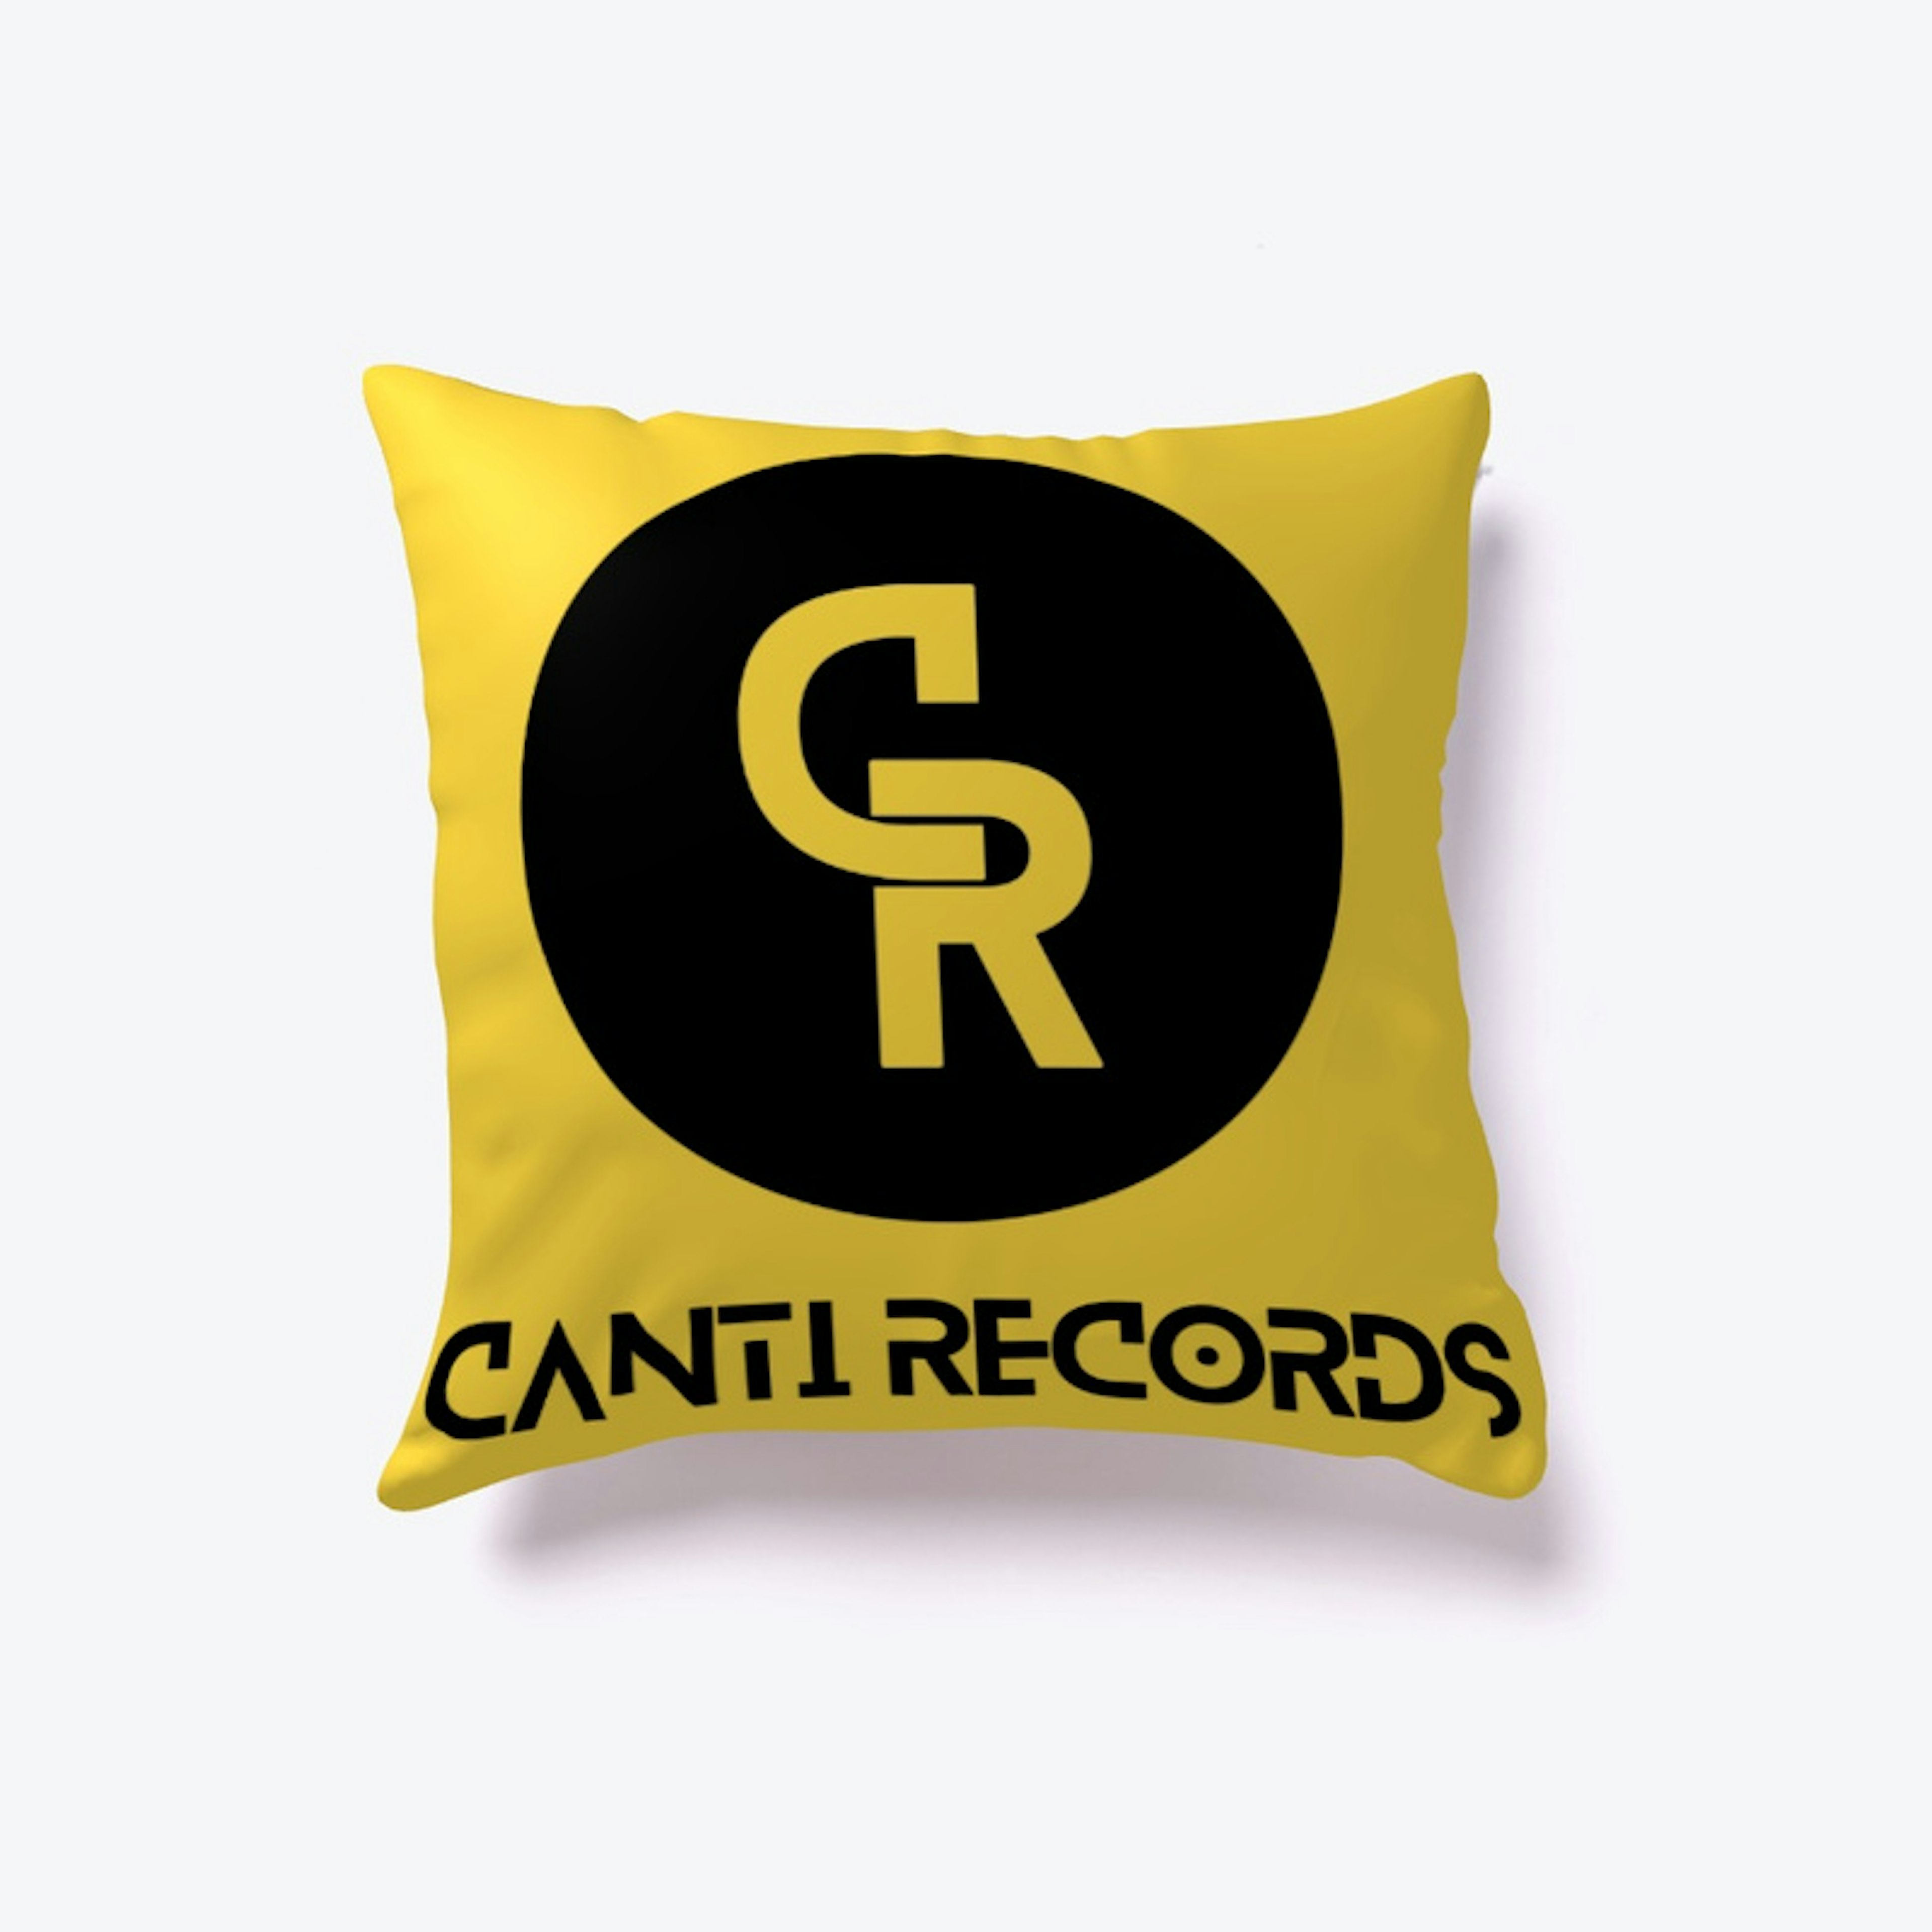 Canti Records - Pillow